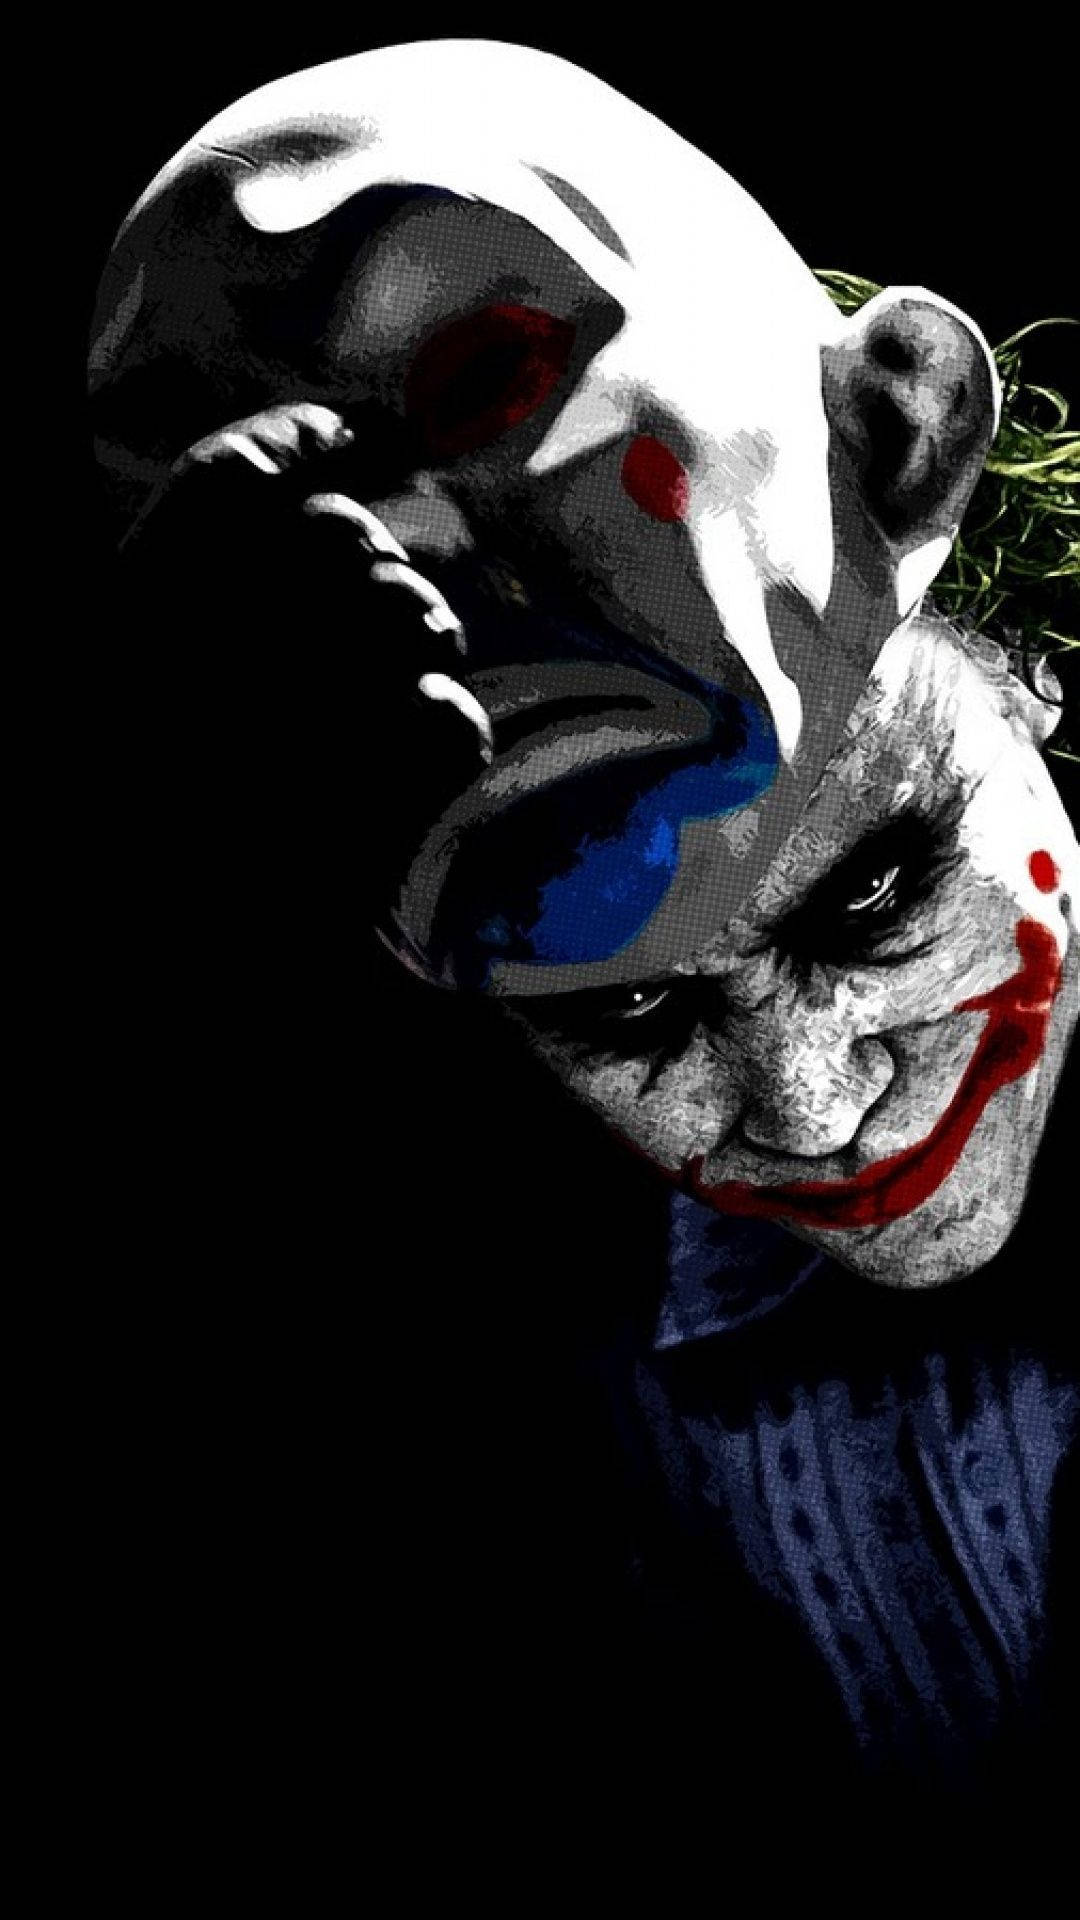 Captivating Joker Art for iPhone Screen Wallpaper